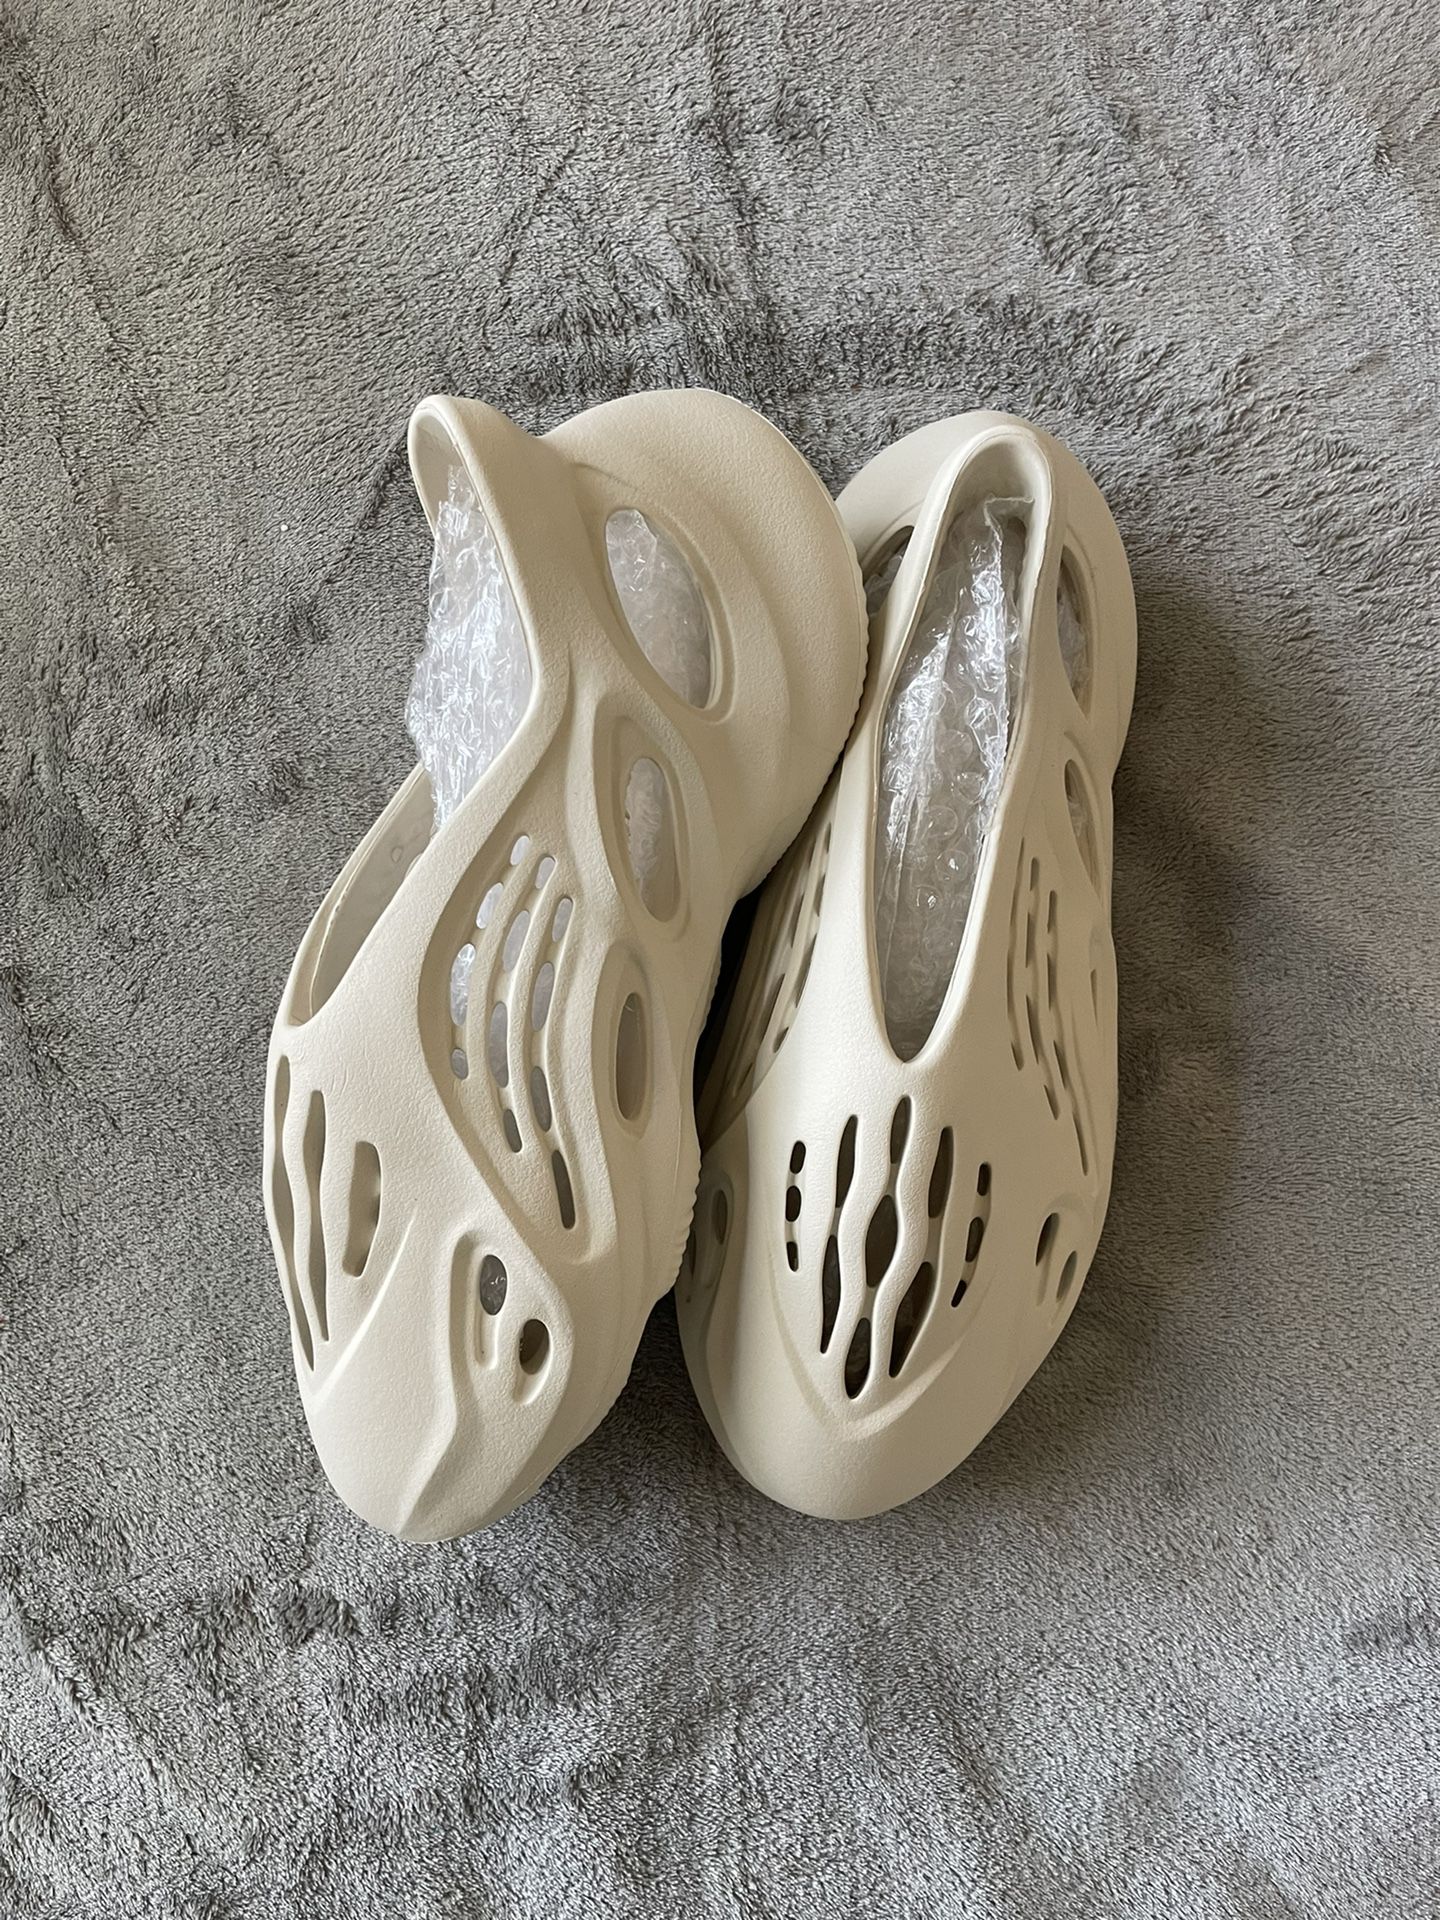 Adidas Yeezy  Foam Runner 